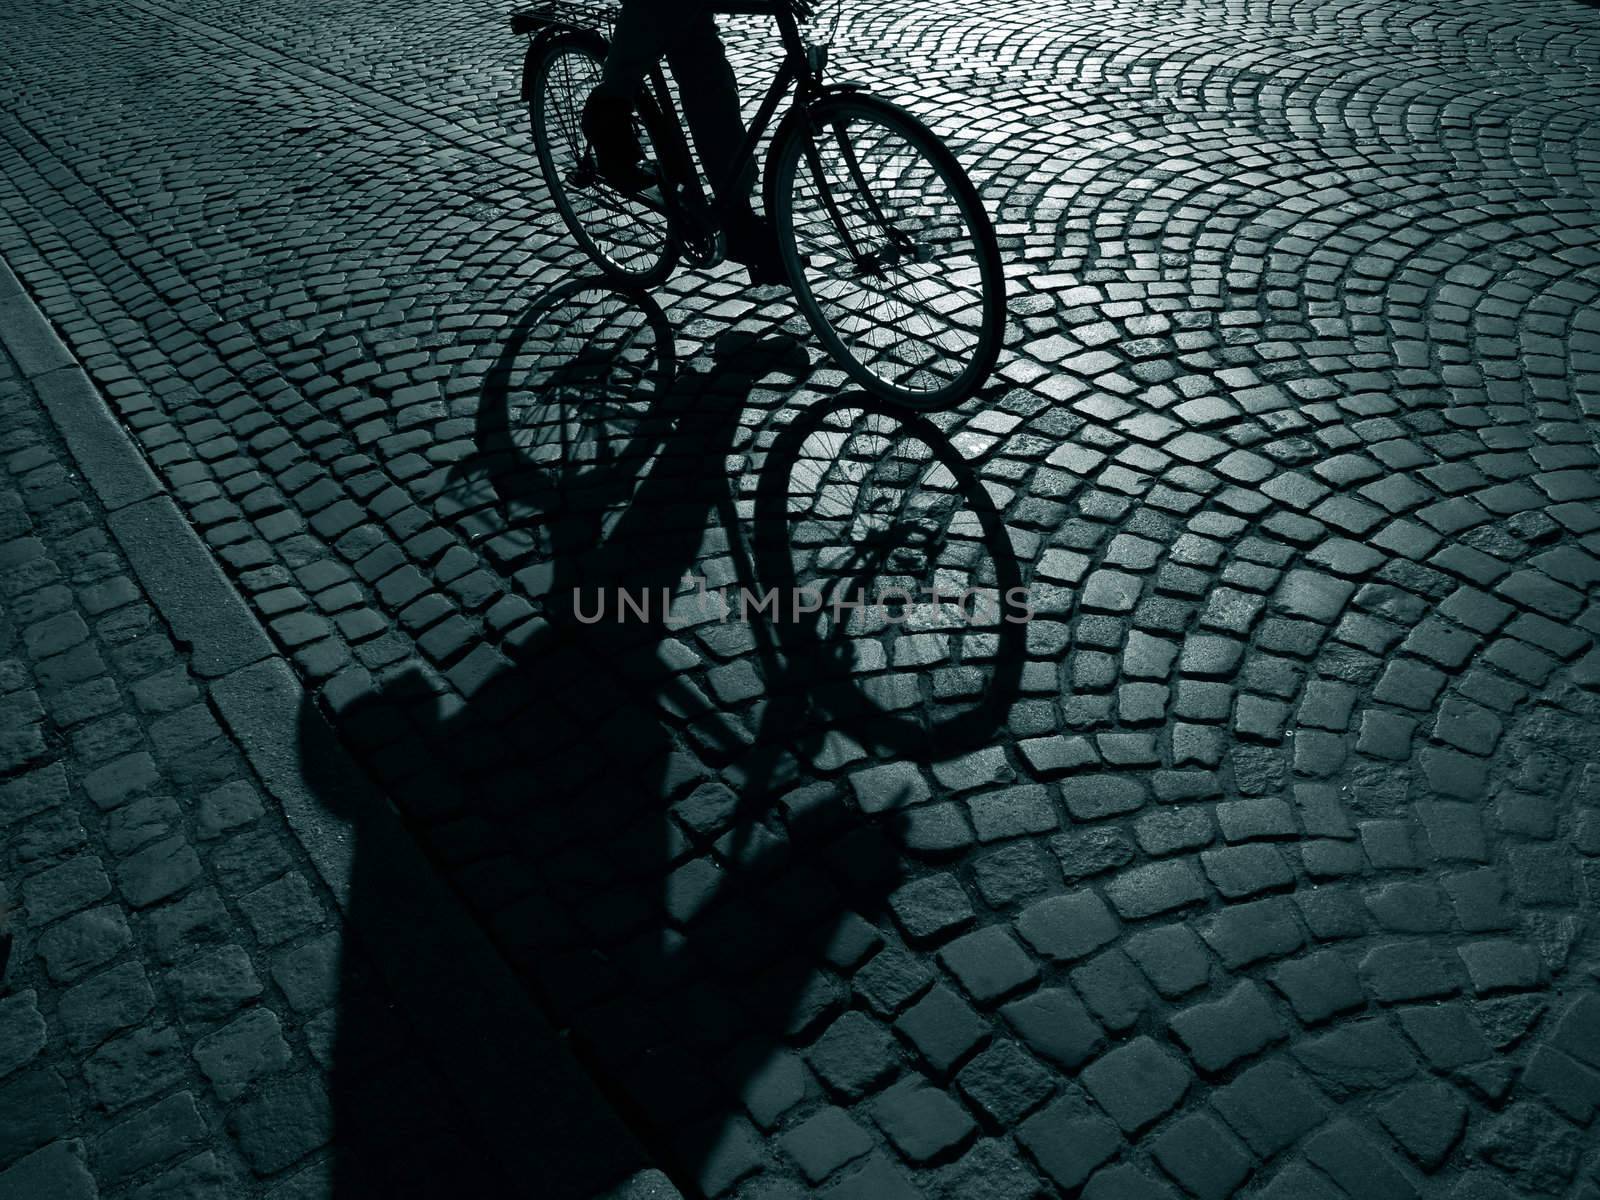 Dark urban cyclist  on his way home after work - Denmark.